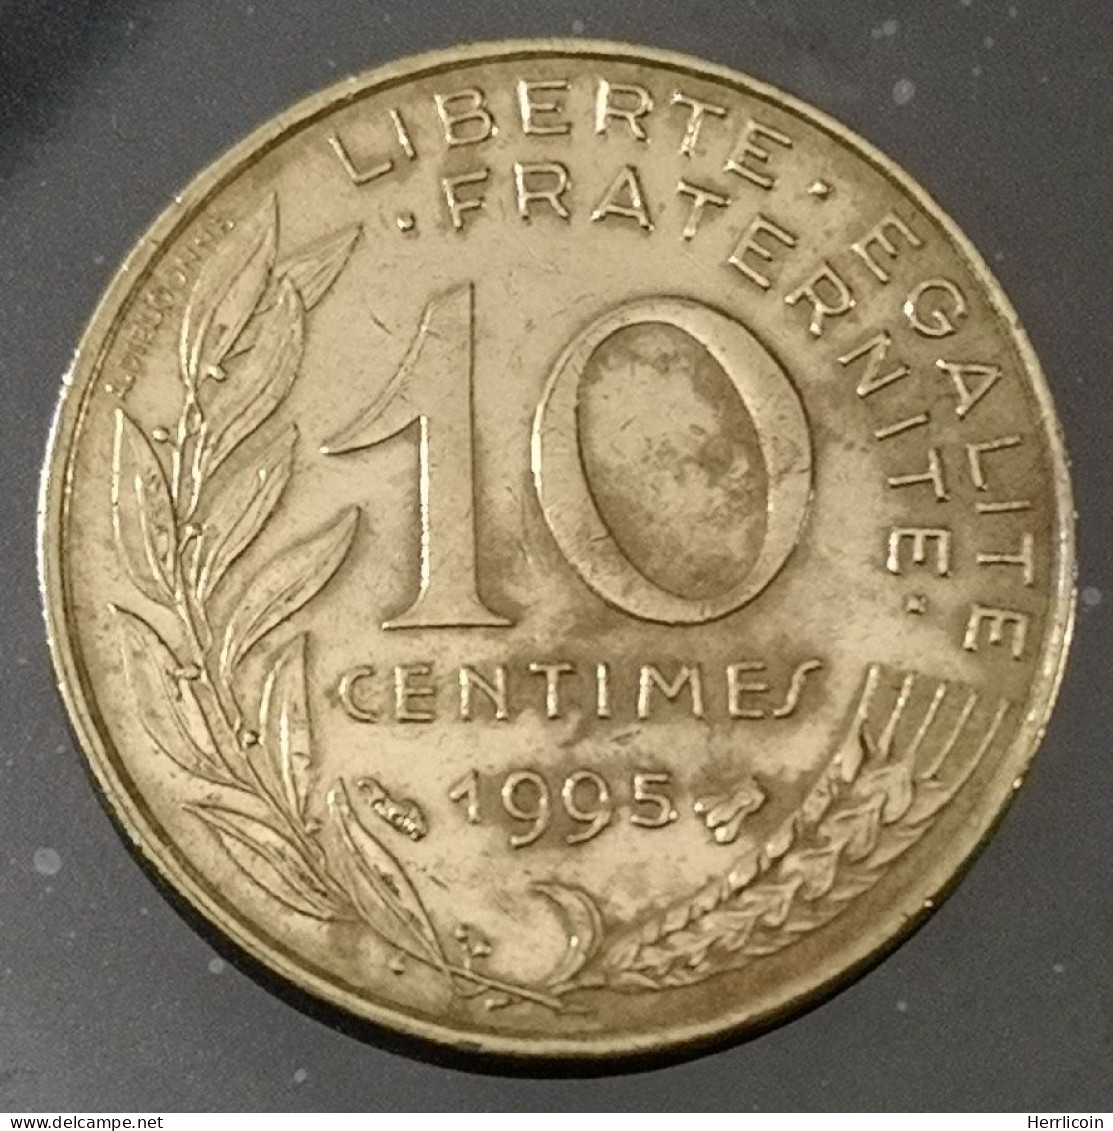 Monnaie France - 1995 - 10 Centimes Marianne - 10 Centimes